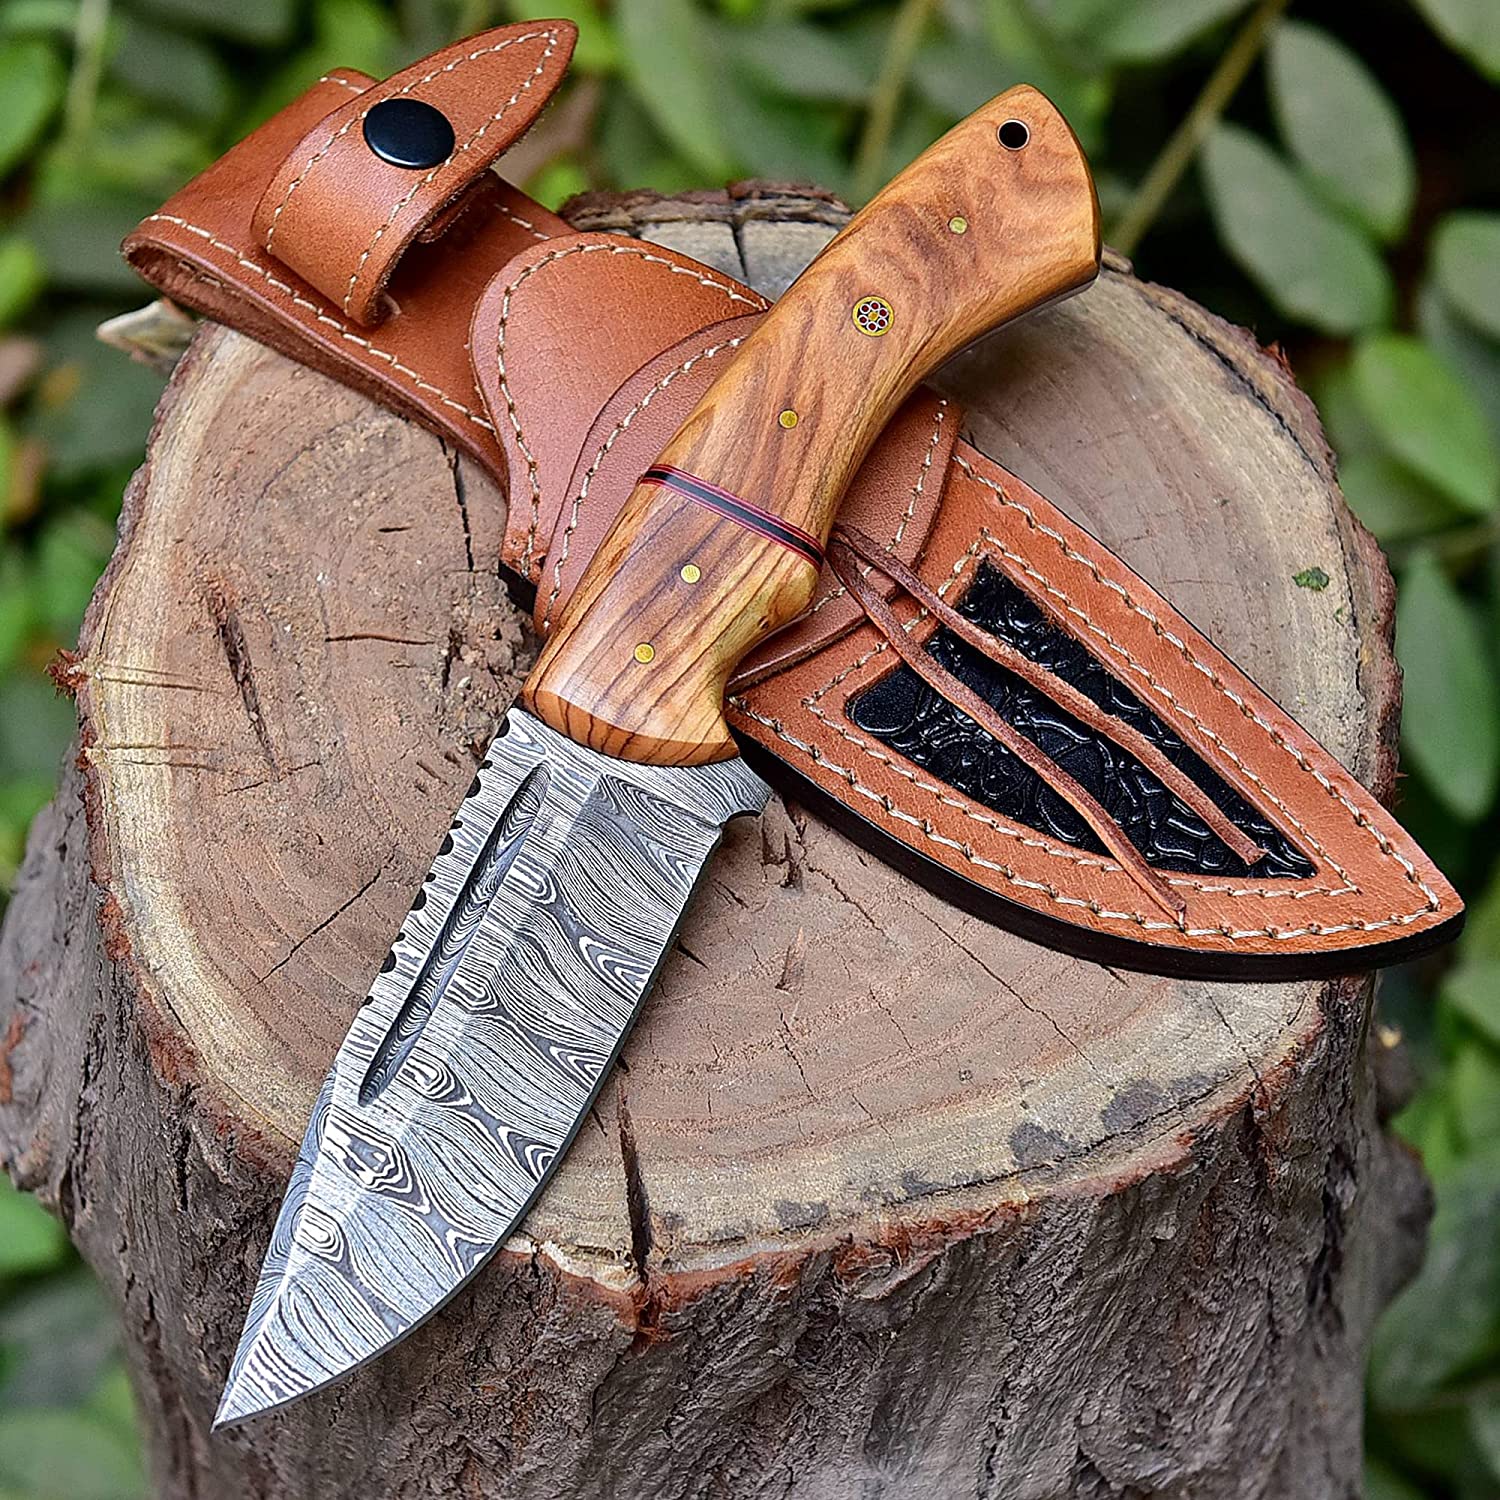 BG Knives Handmade Damascus Steel Hunting Fixed Blade Knife With Leather Sheath, Olive Wood Handle – 9.75" Length Full Tang Multipurpose Knife K-152